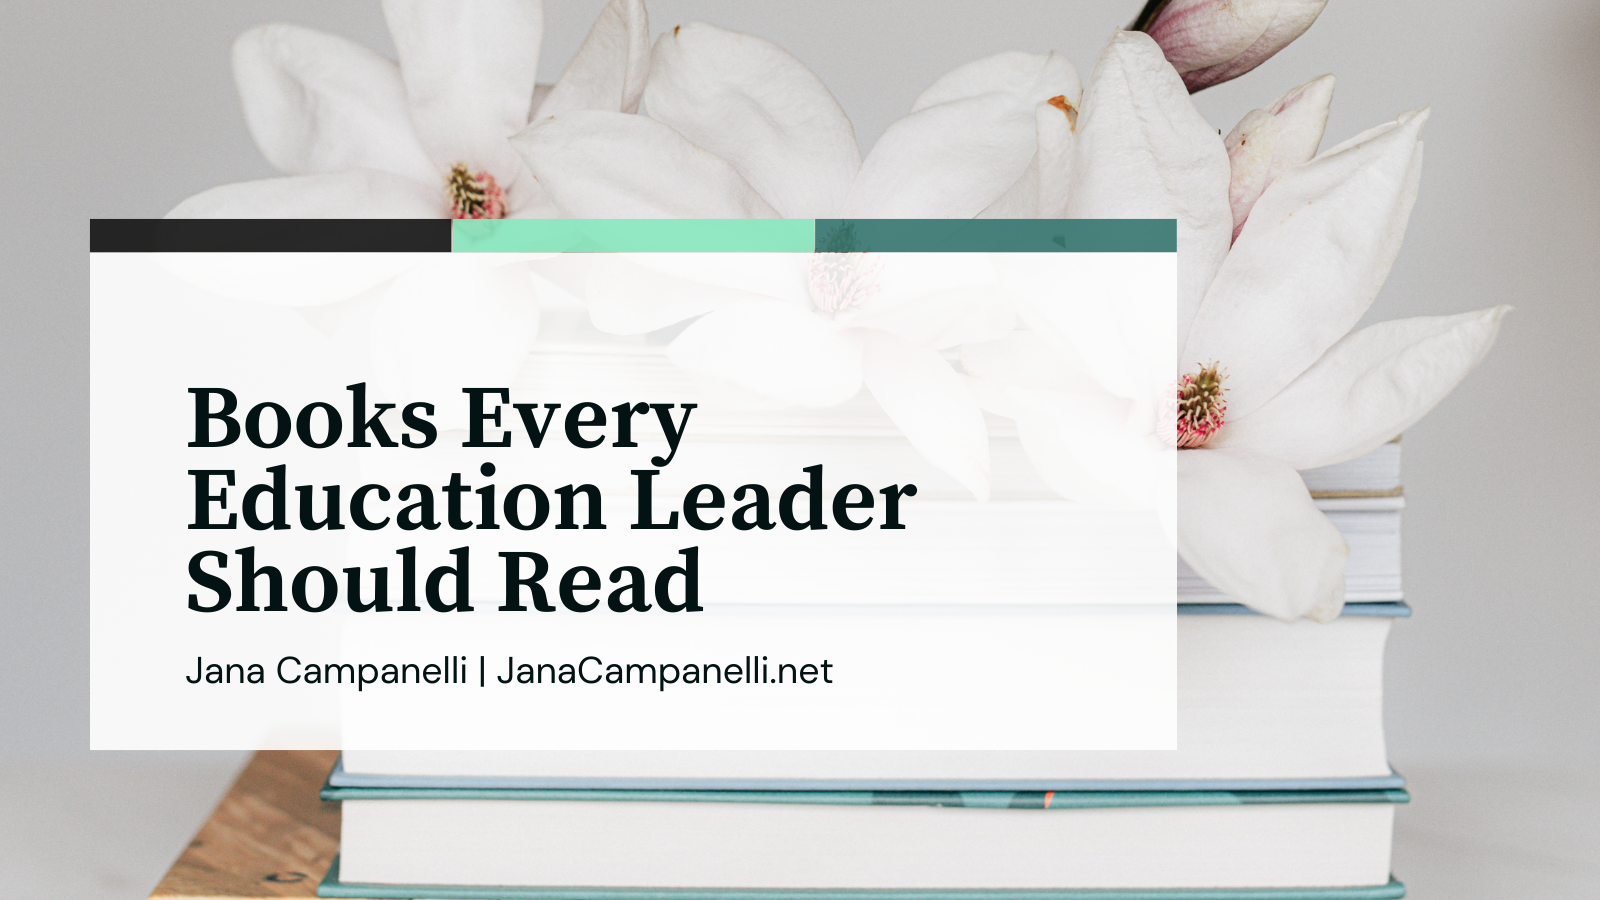 Jana Campanelli .net books every education leader should read